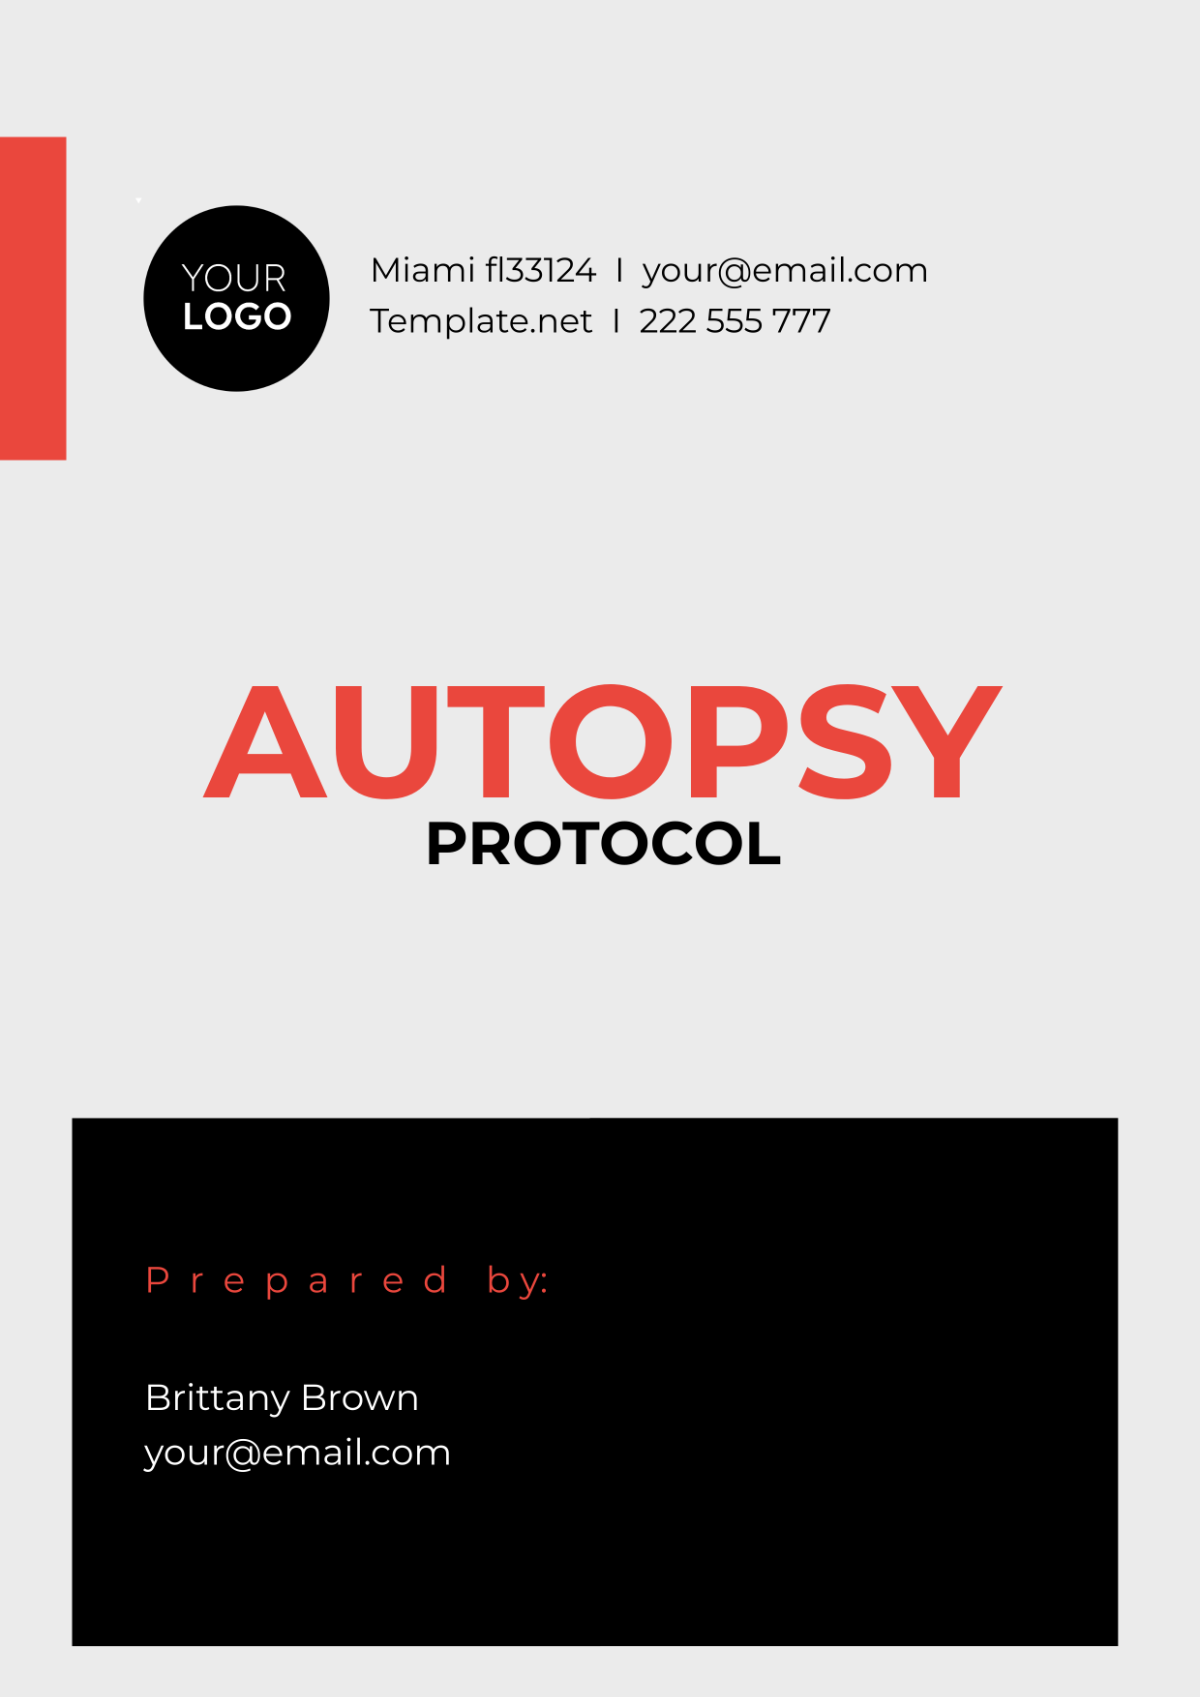 Autopsy Protocol Template